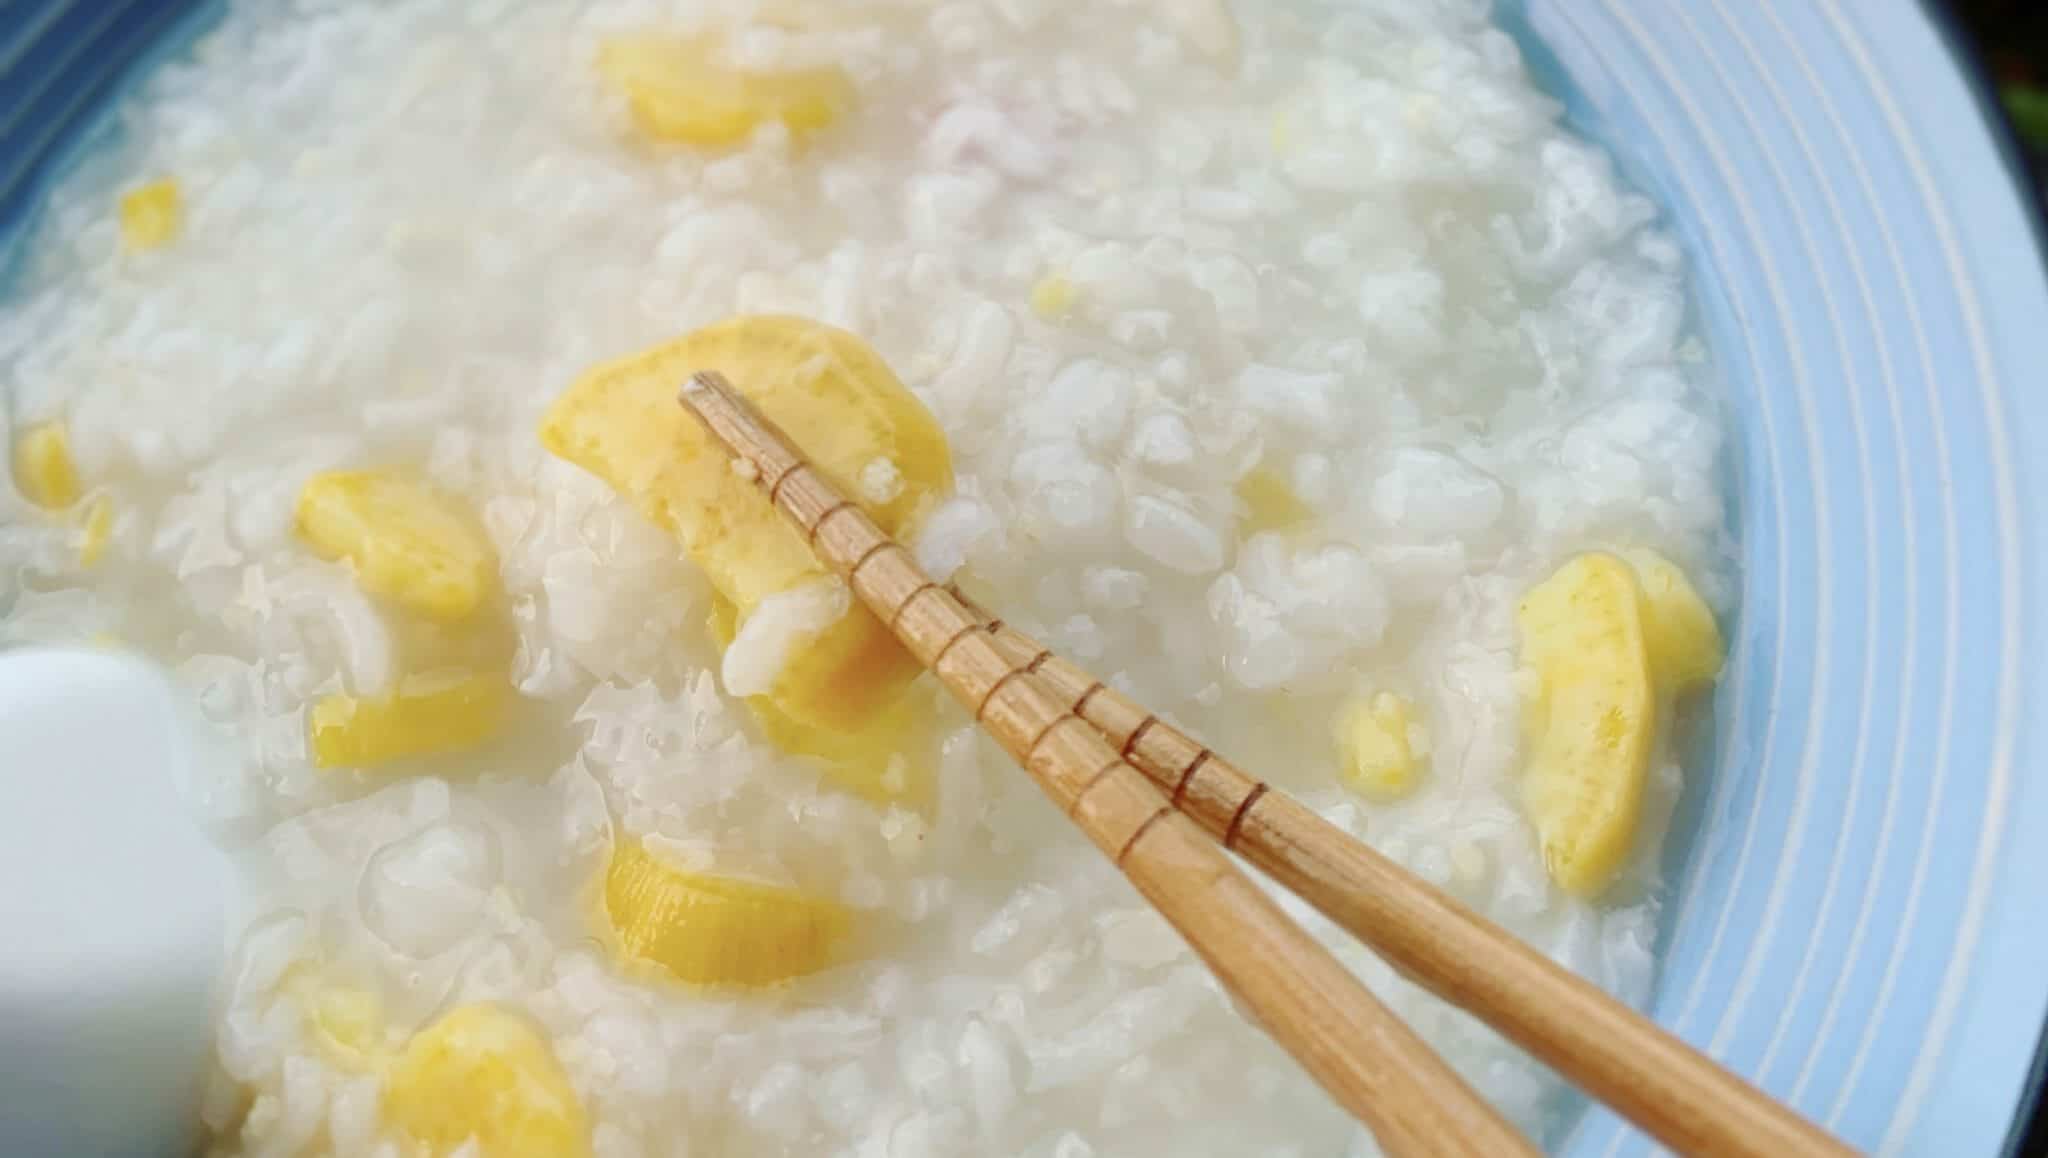 My Wok Life Cooking Blog - Superfood Sweet Potato Porridge 超级食物 - 番薯粥 (地瓜粥) - Sweet Potato Porridge